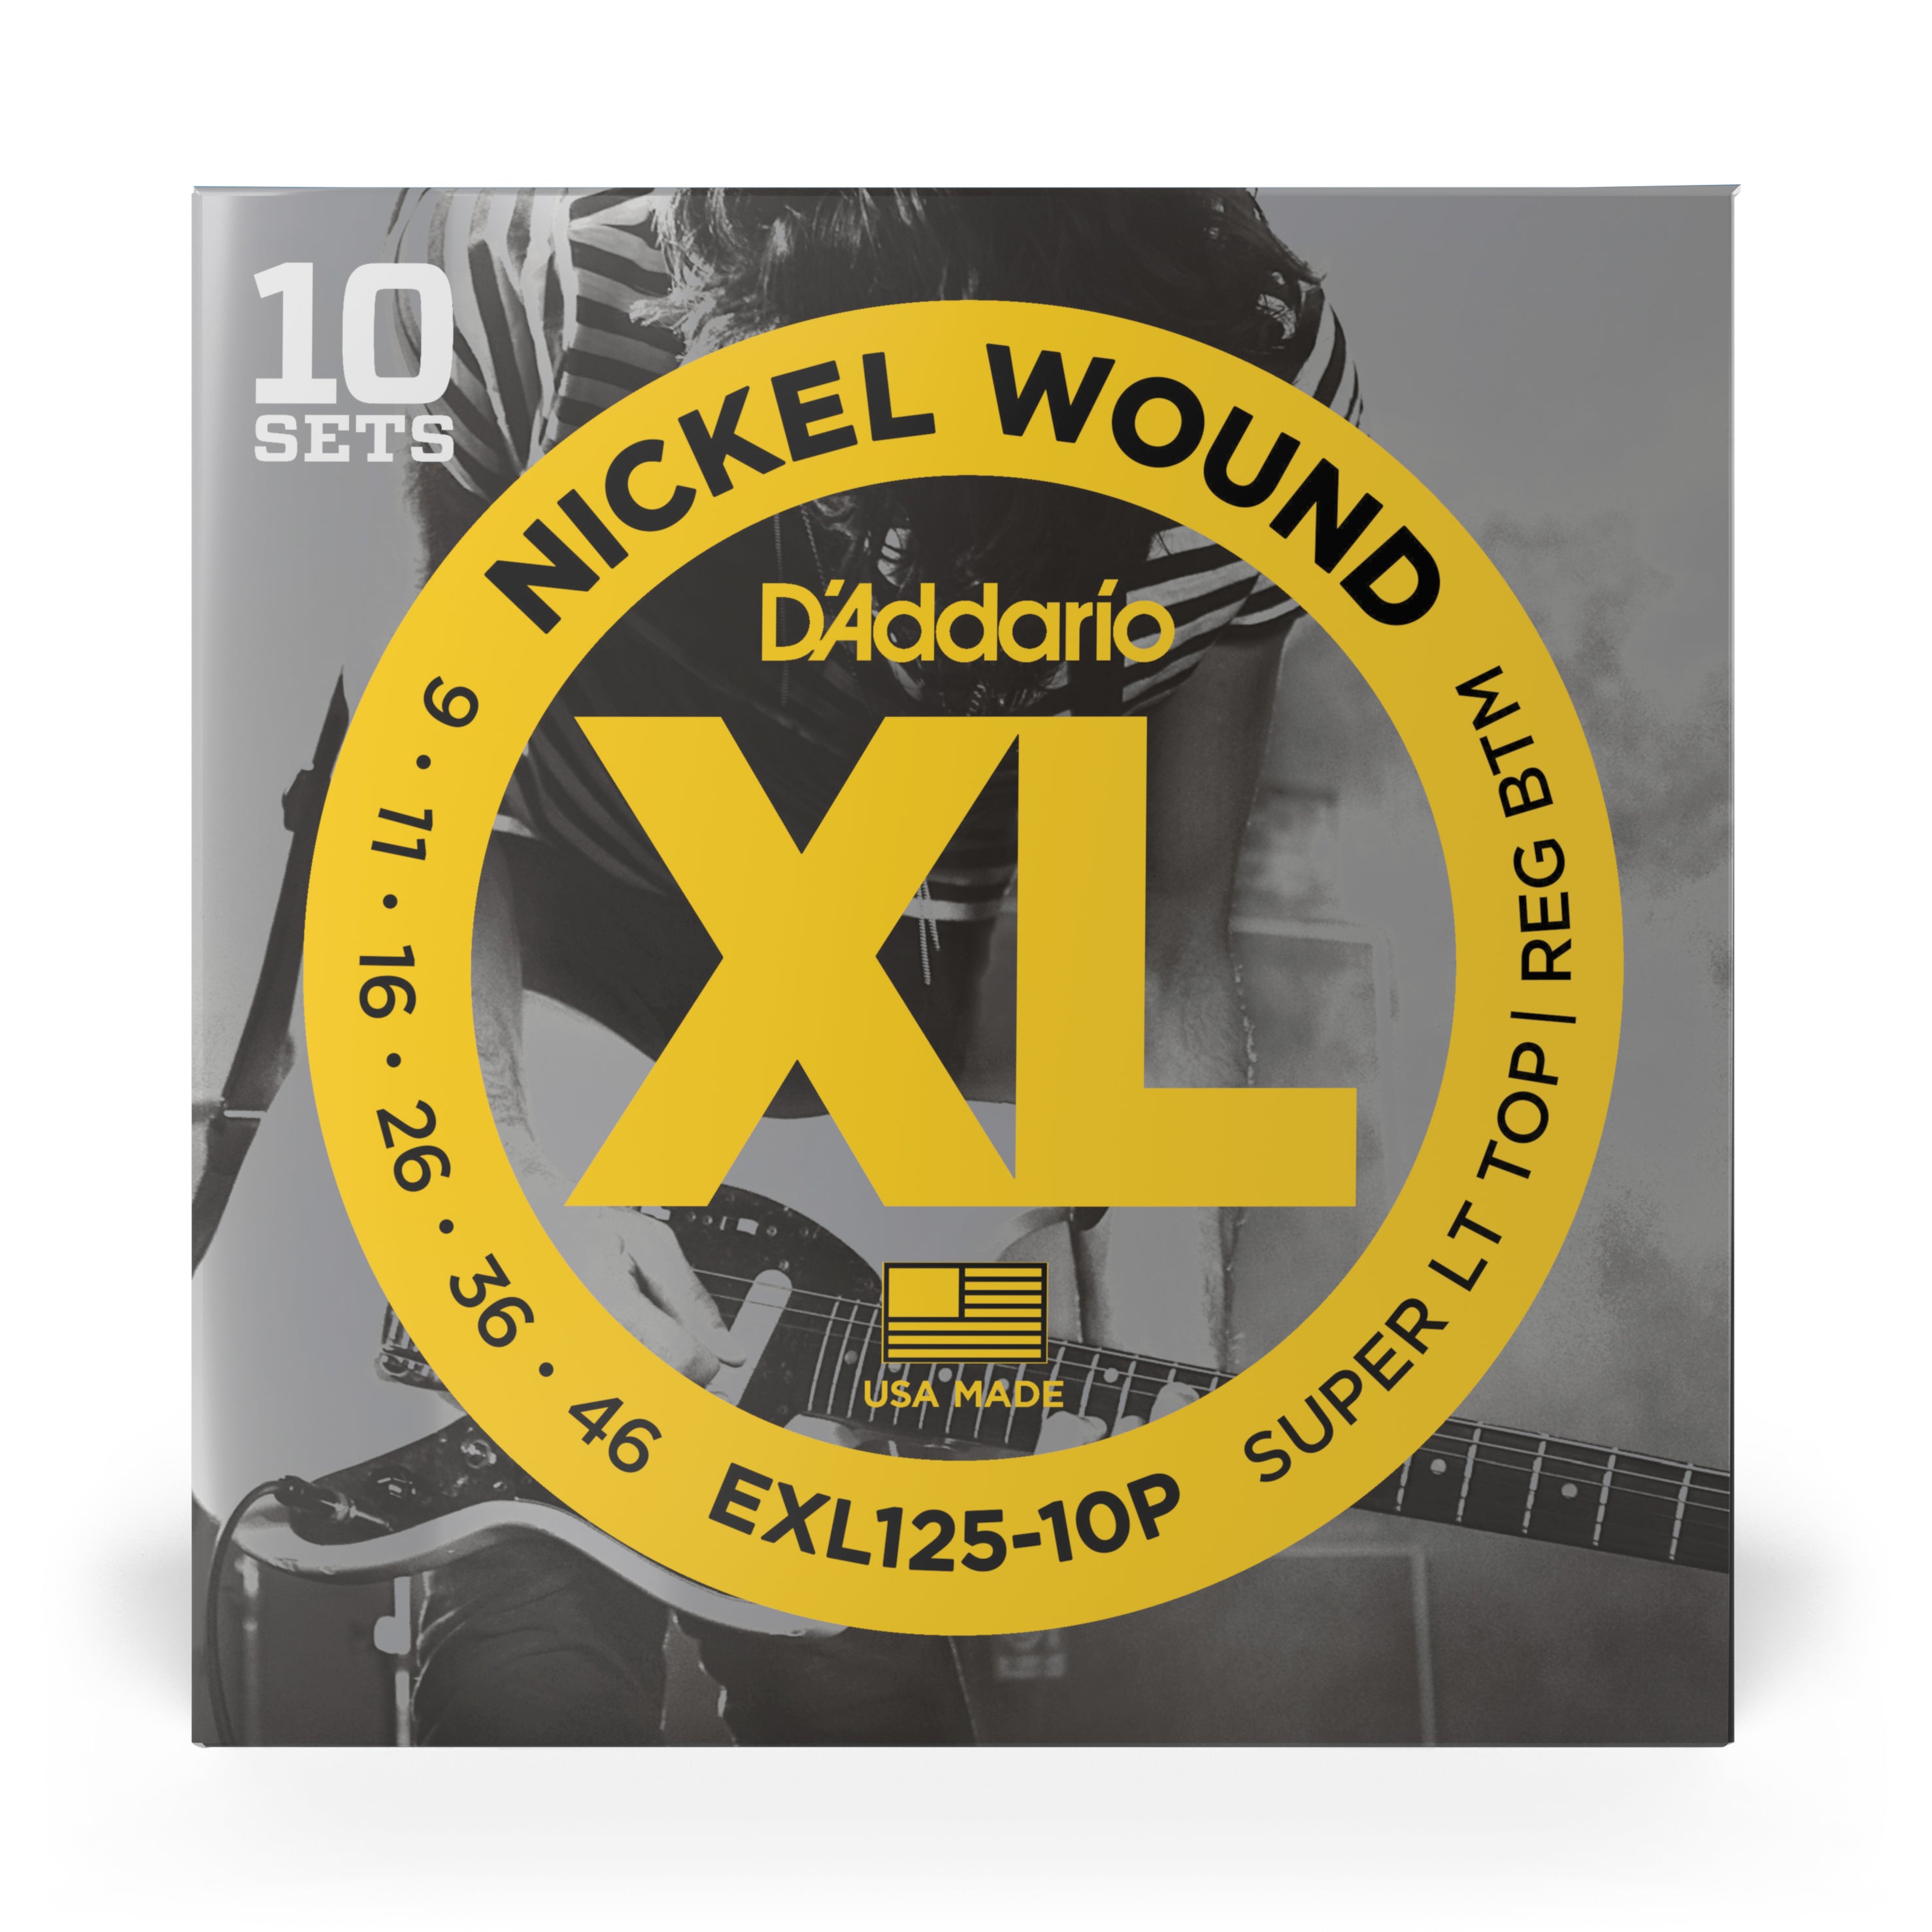 D'Addario EXL125-10P Nickel Wound 9-46 Electric Guitar Strings, Custom Light, 10-Pack